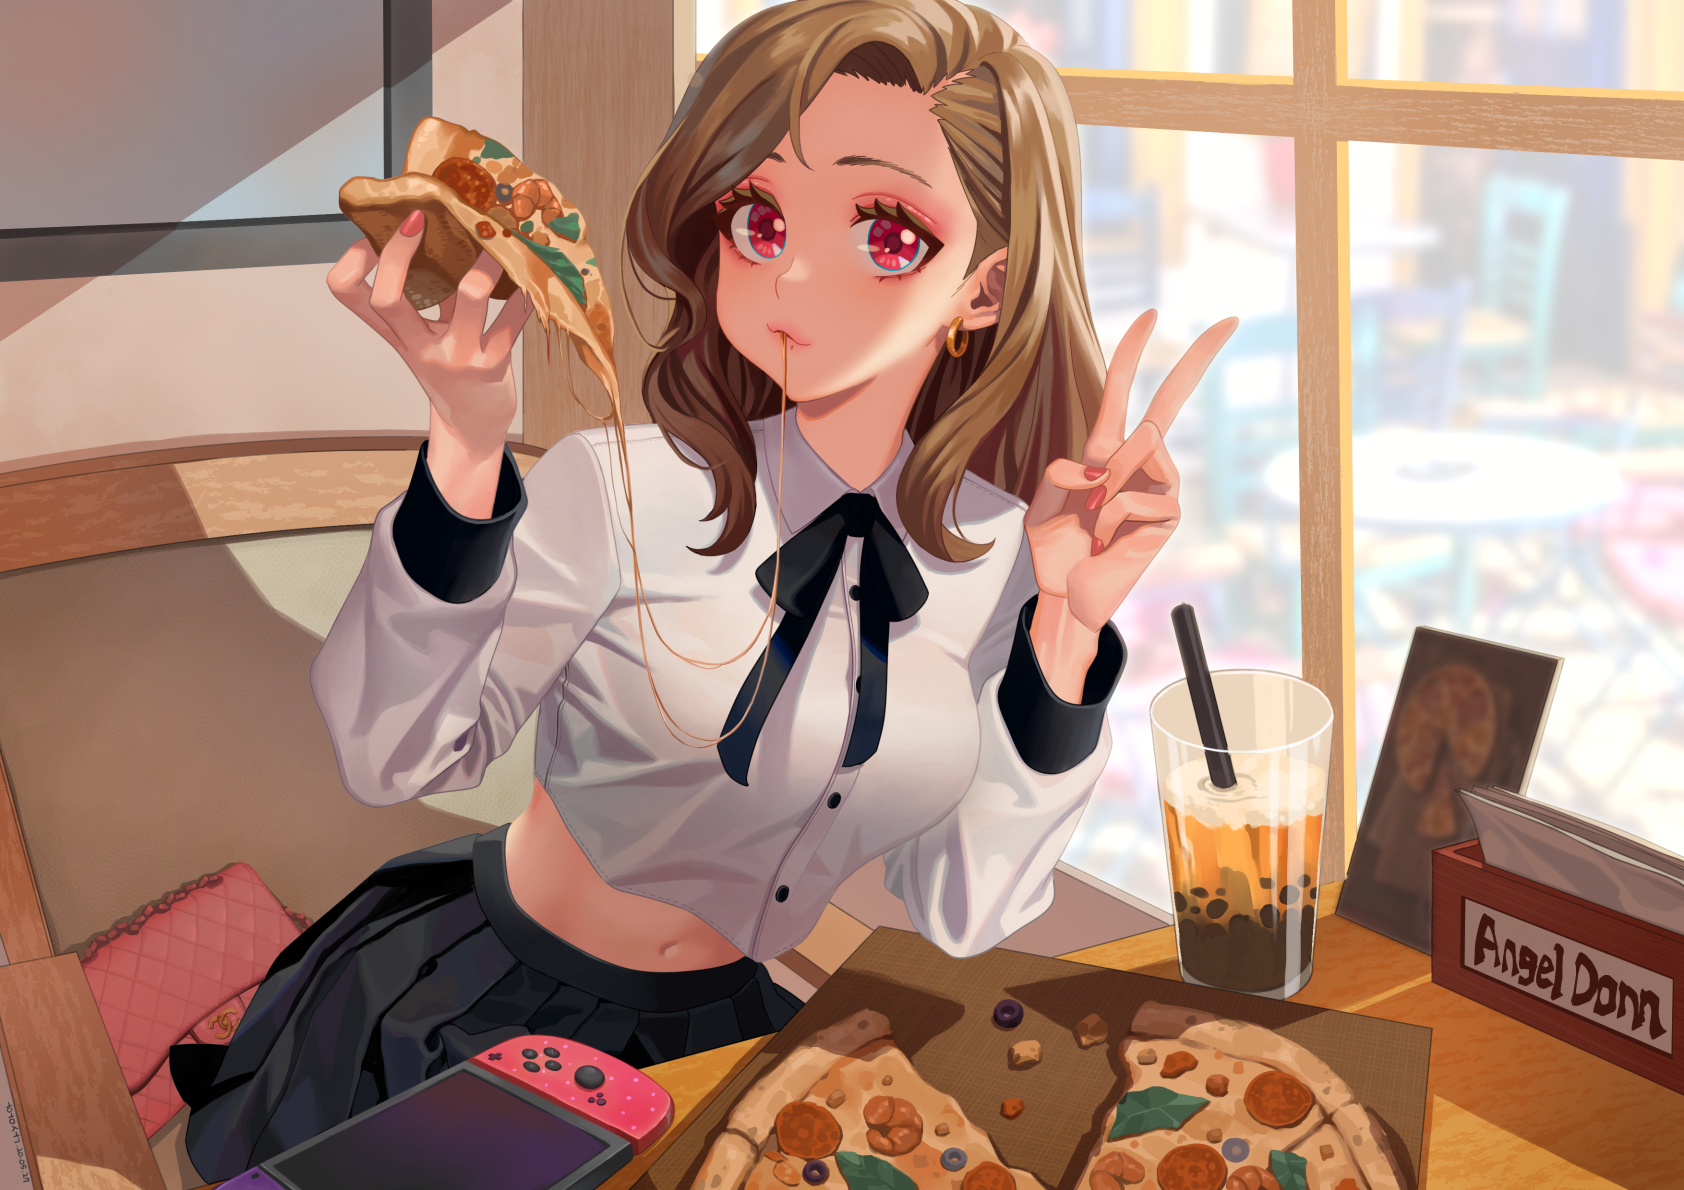 Anime Anime Girls Red Eyes Brunette Pizza Nintendo Switch Ear Piercing Drink Eating Handbags School  1684x1190